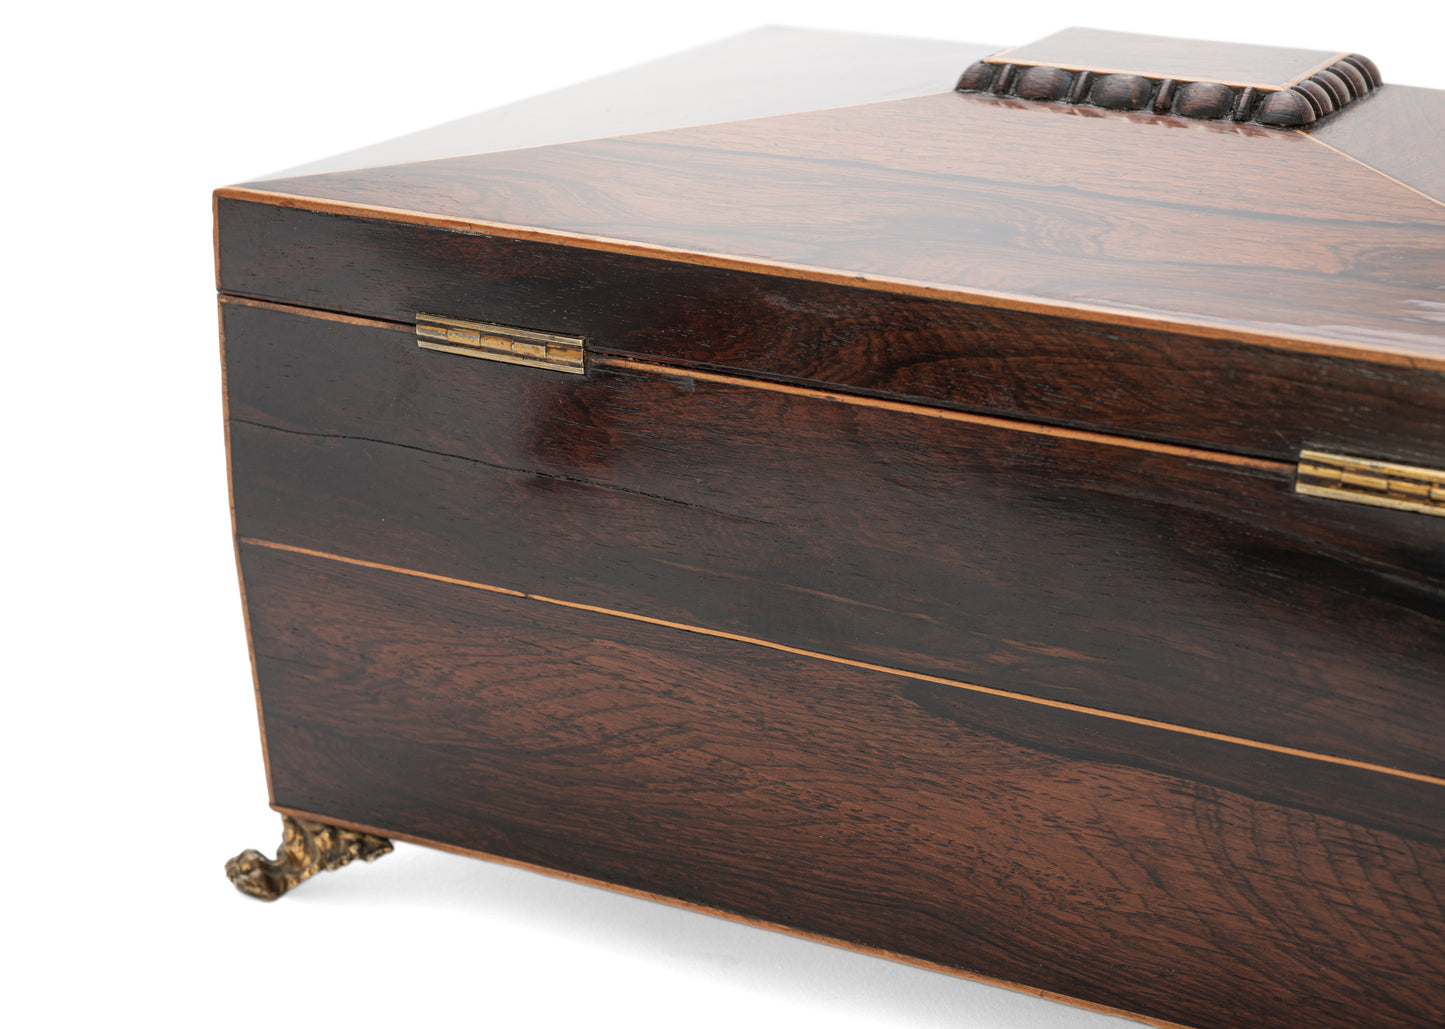 Antique Georgian Regency Rosewood & Box Wood Strung Work or Table Box c1825 (Code 2138)